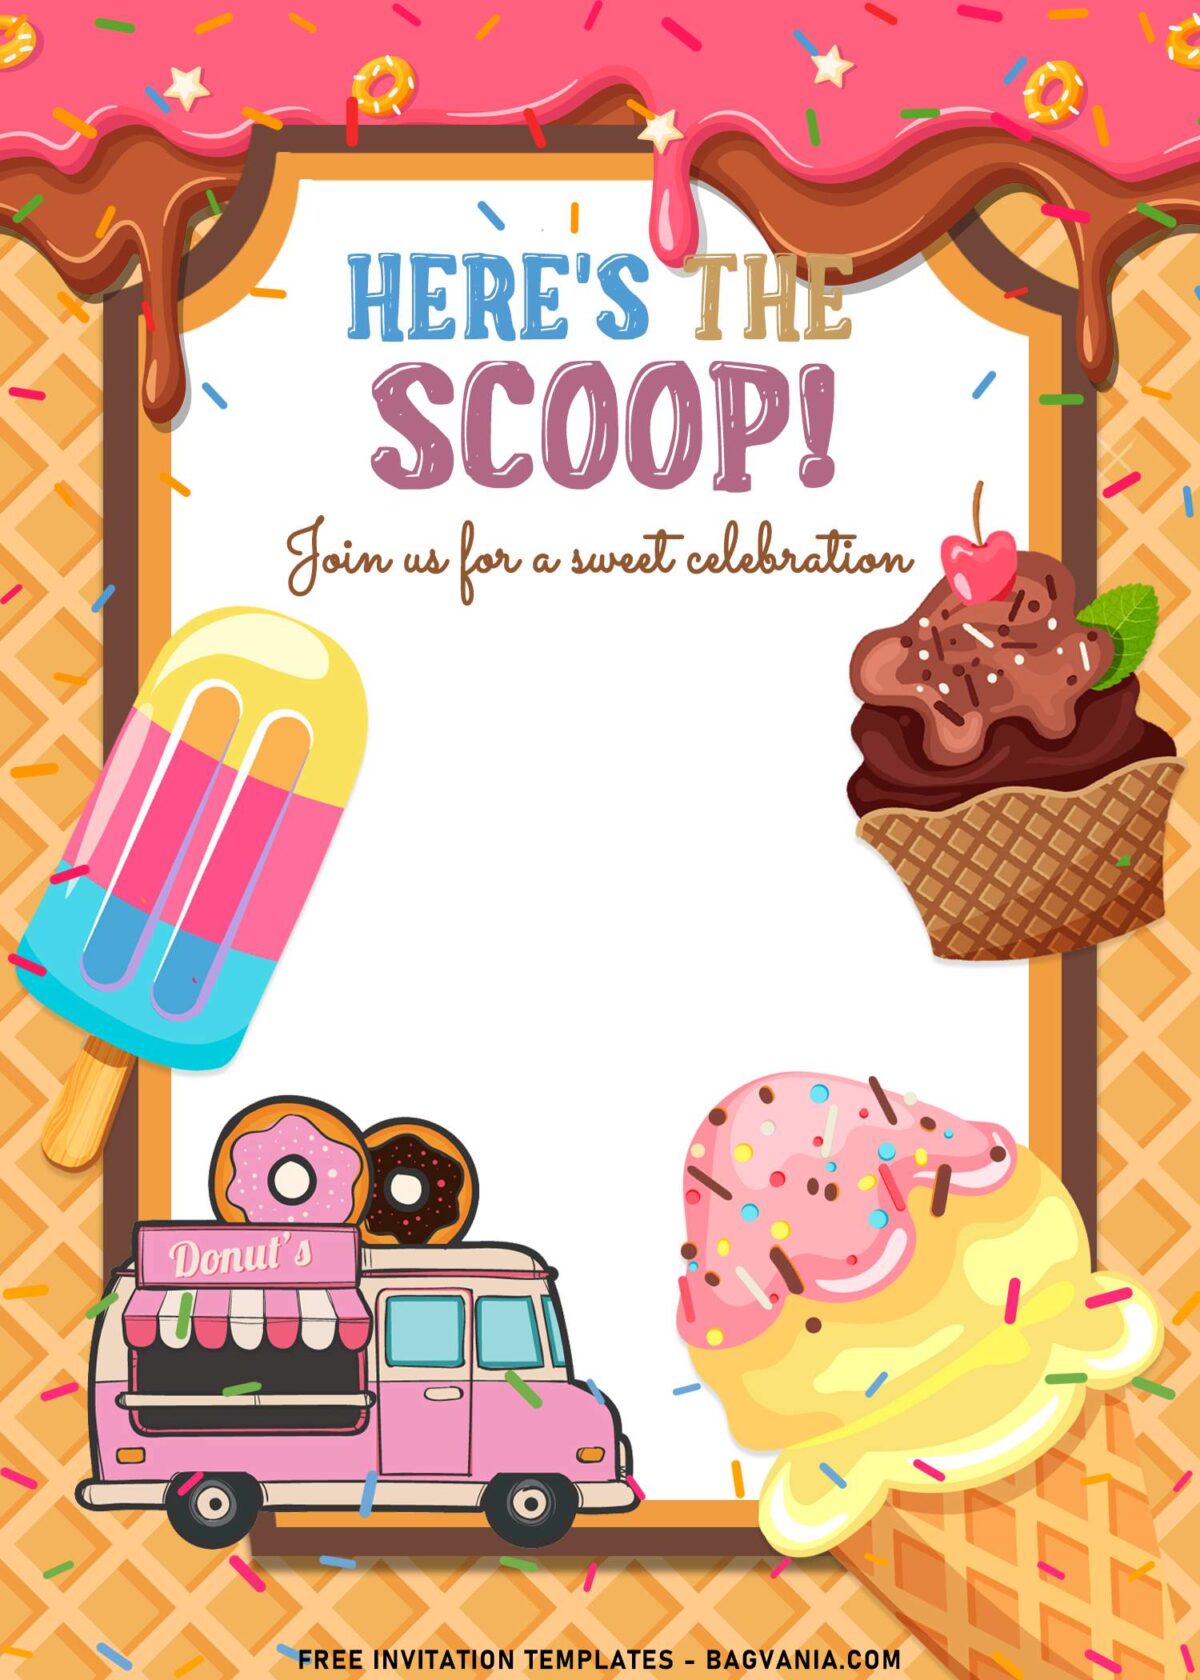 9+ Ice Cream Party Invitation Templates For Kids with ice cream van